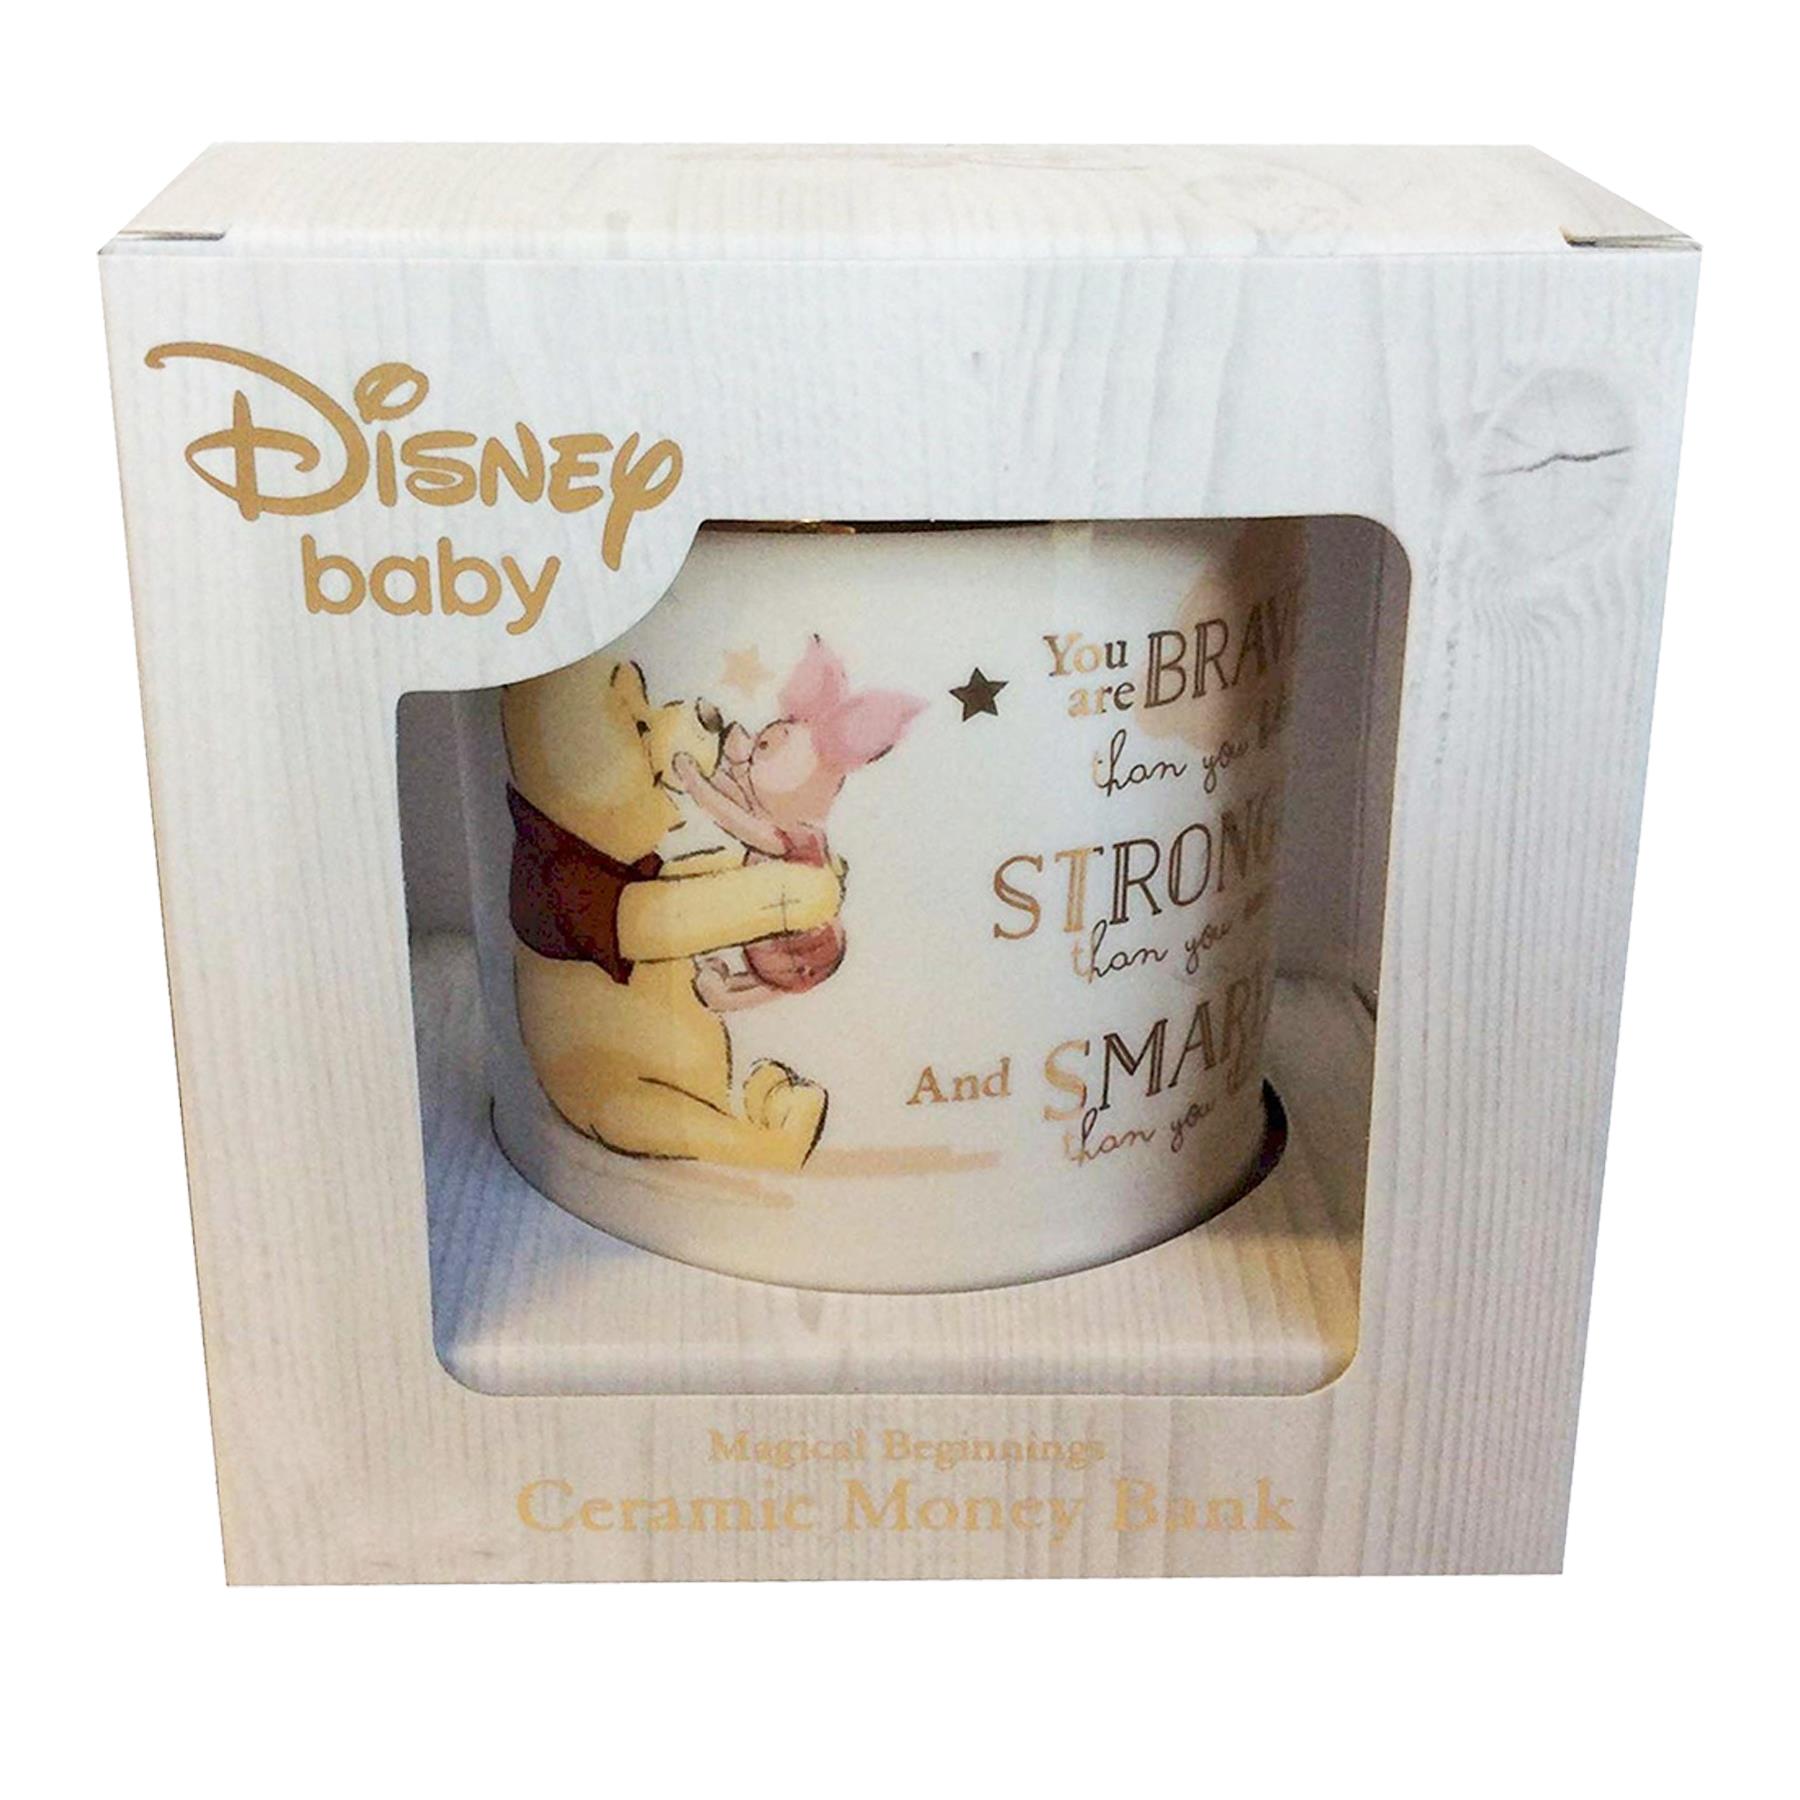 Disney Magical Beginnings Ceramic Money Box Bank - Winnie the Pooh DI406